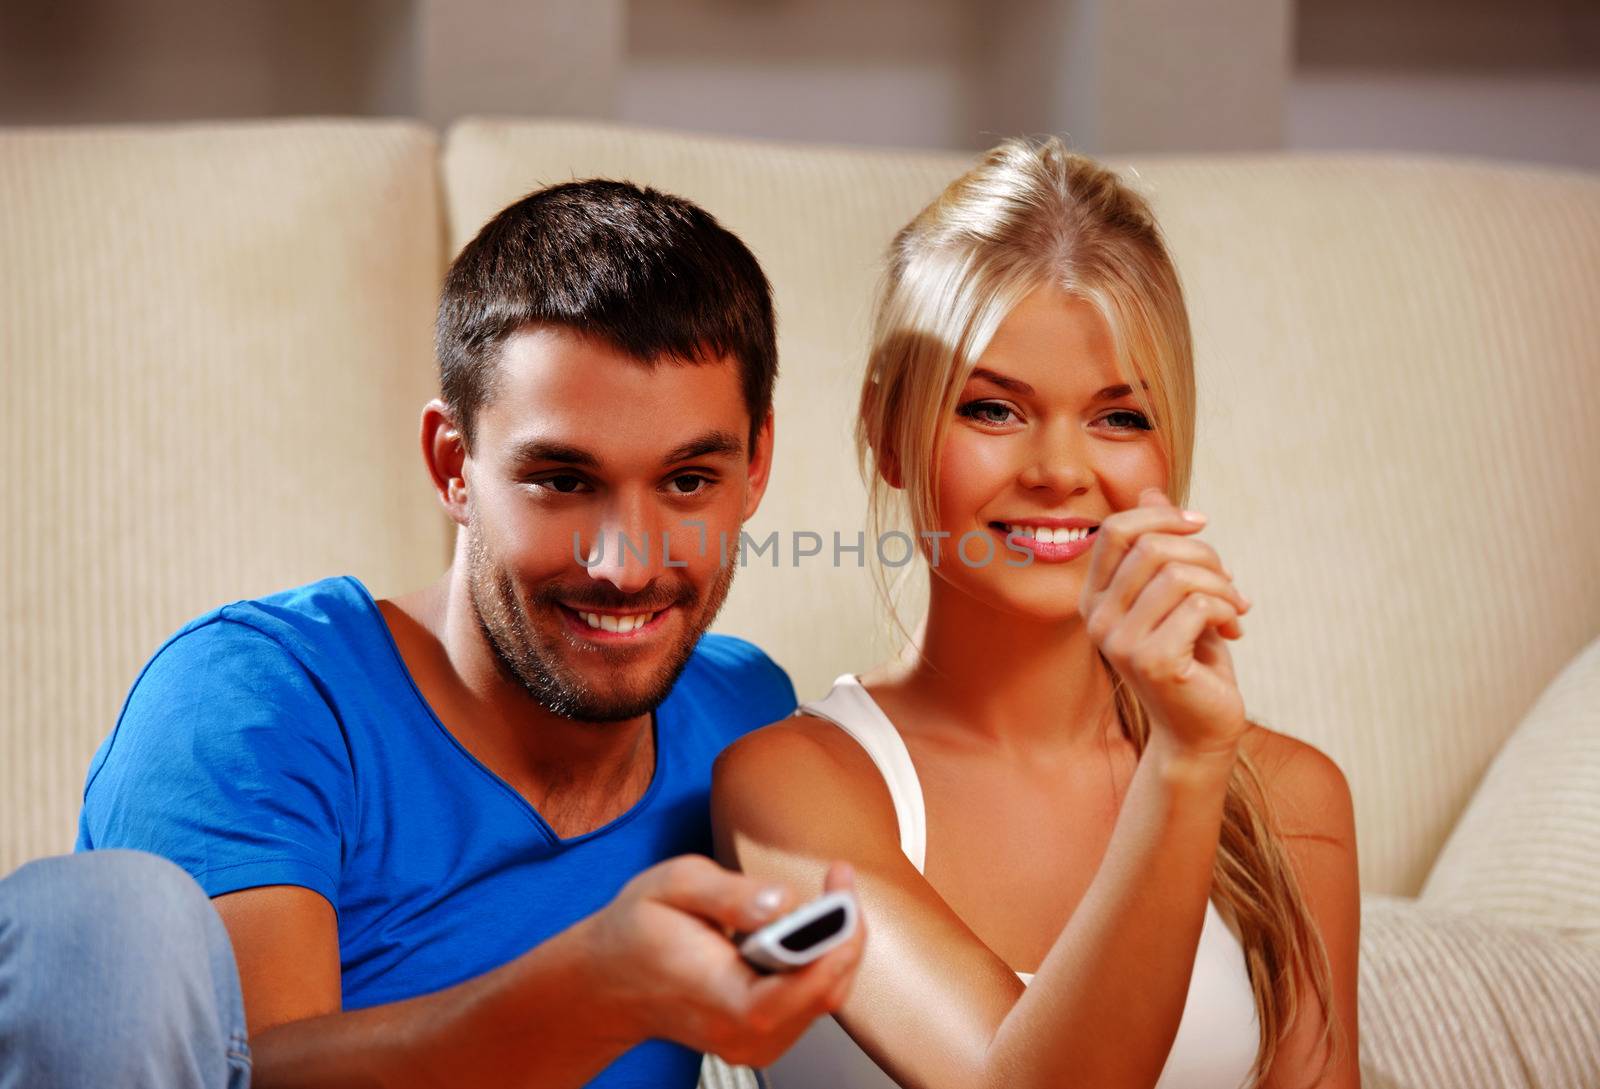 happy romantic couple with TV remote by dolgachov